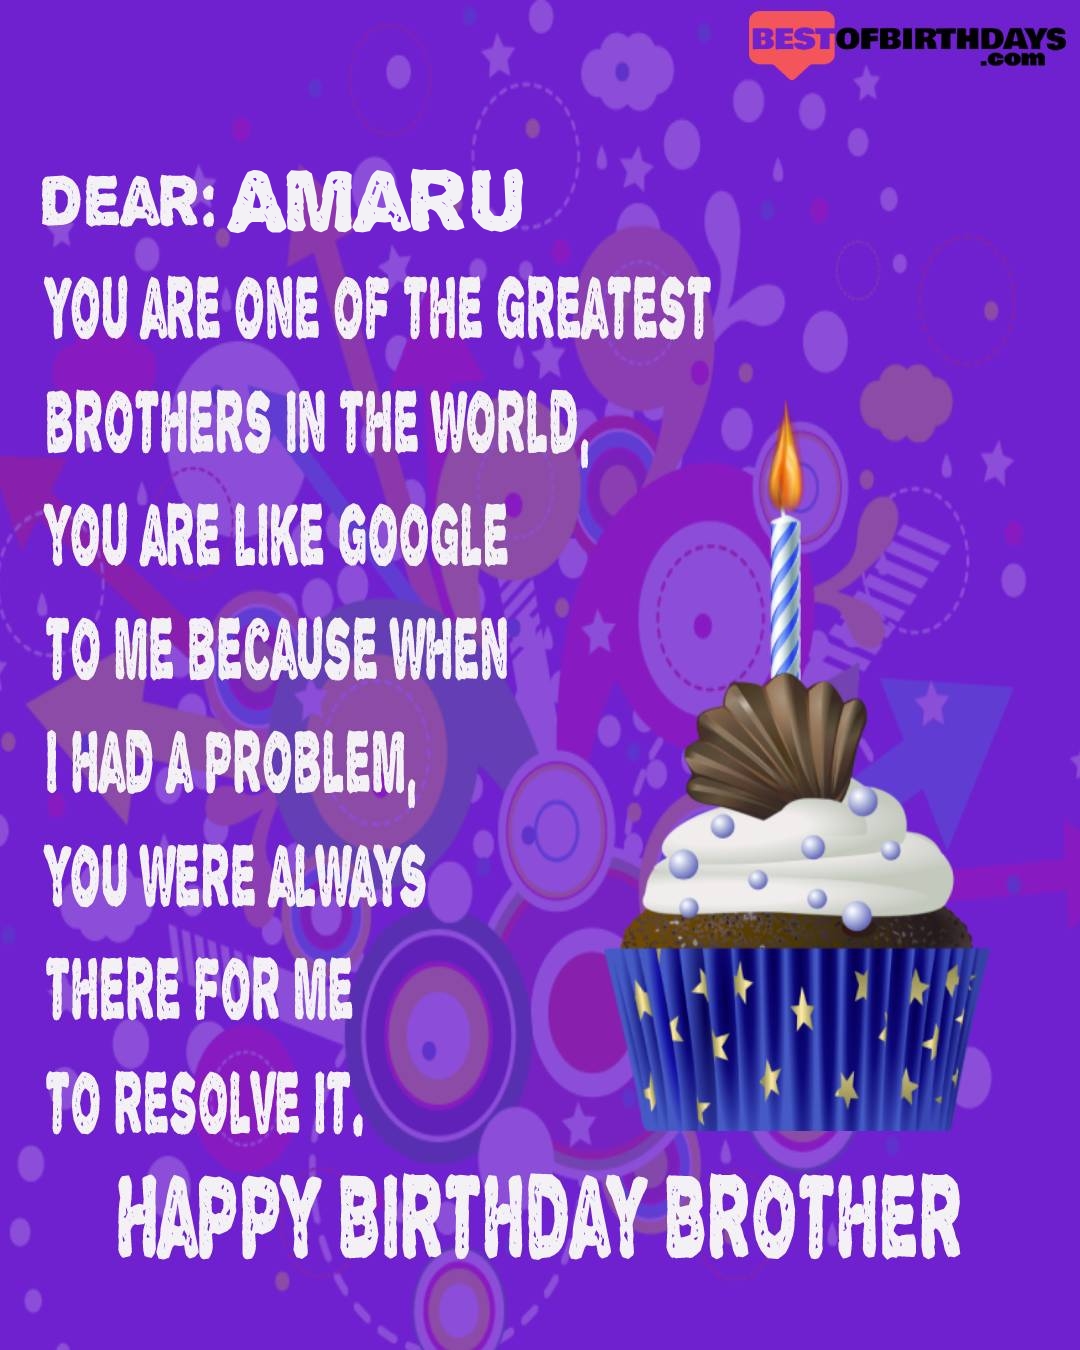 Happy birthday amaru bhai brother bro